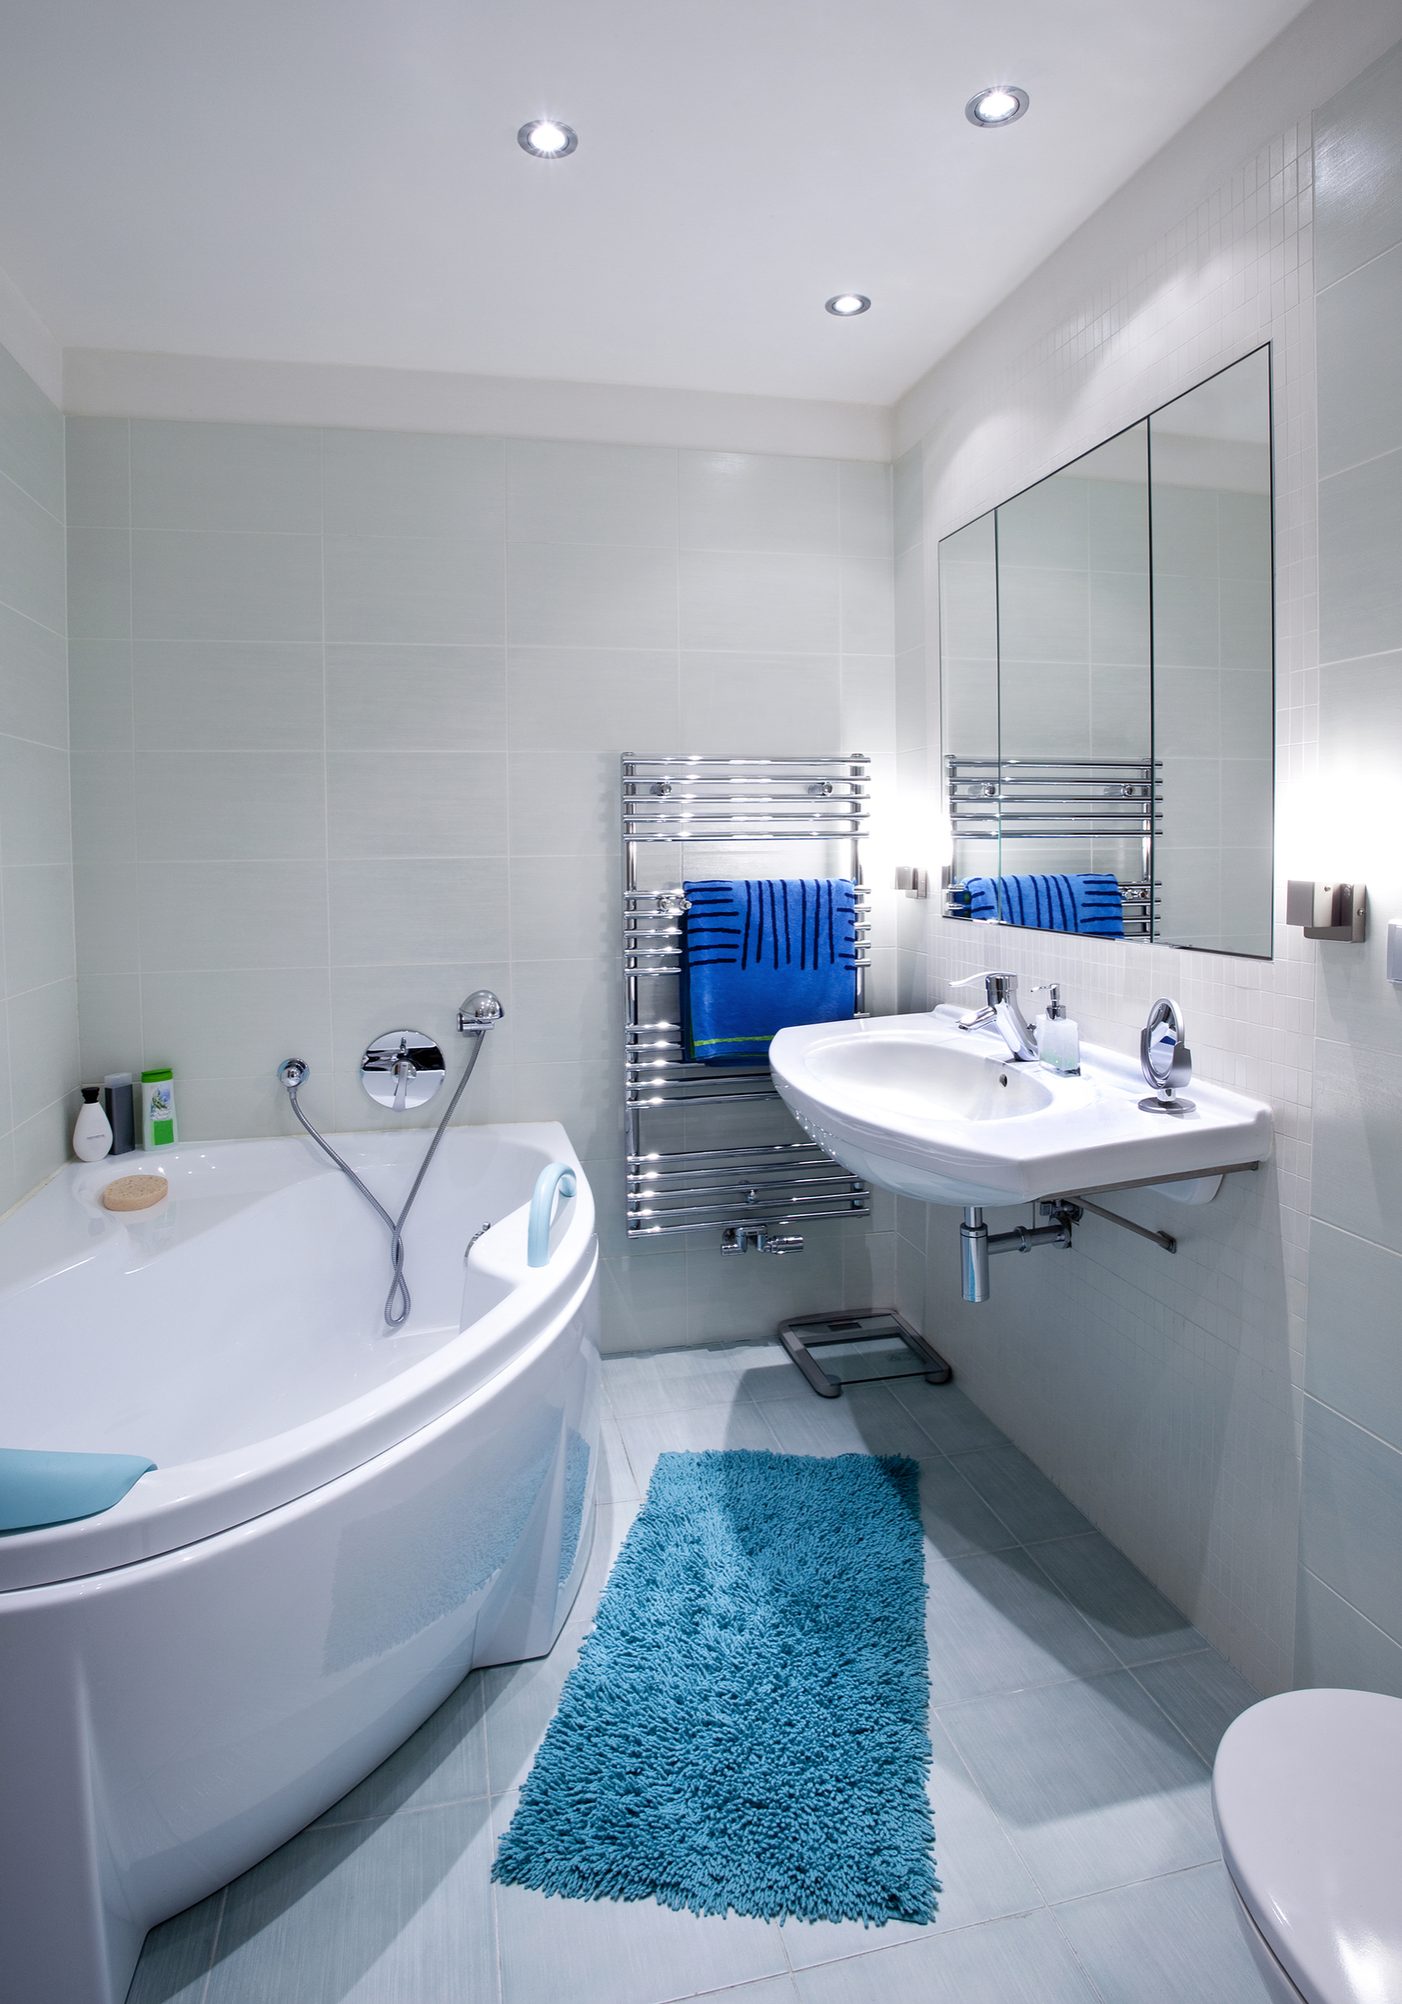 Bathroom Resurfacing Services in Belfast & Ballymena